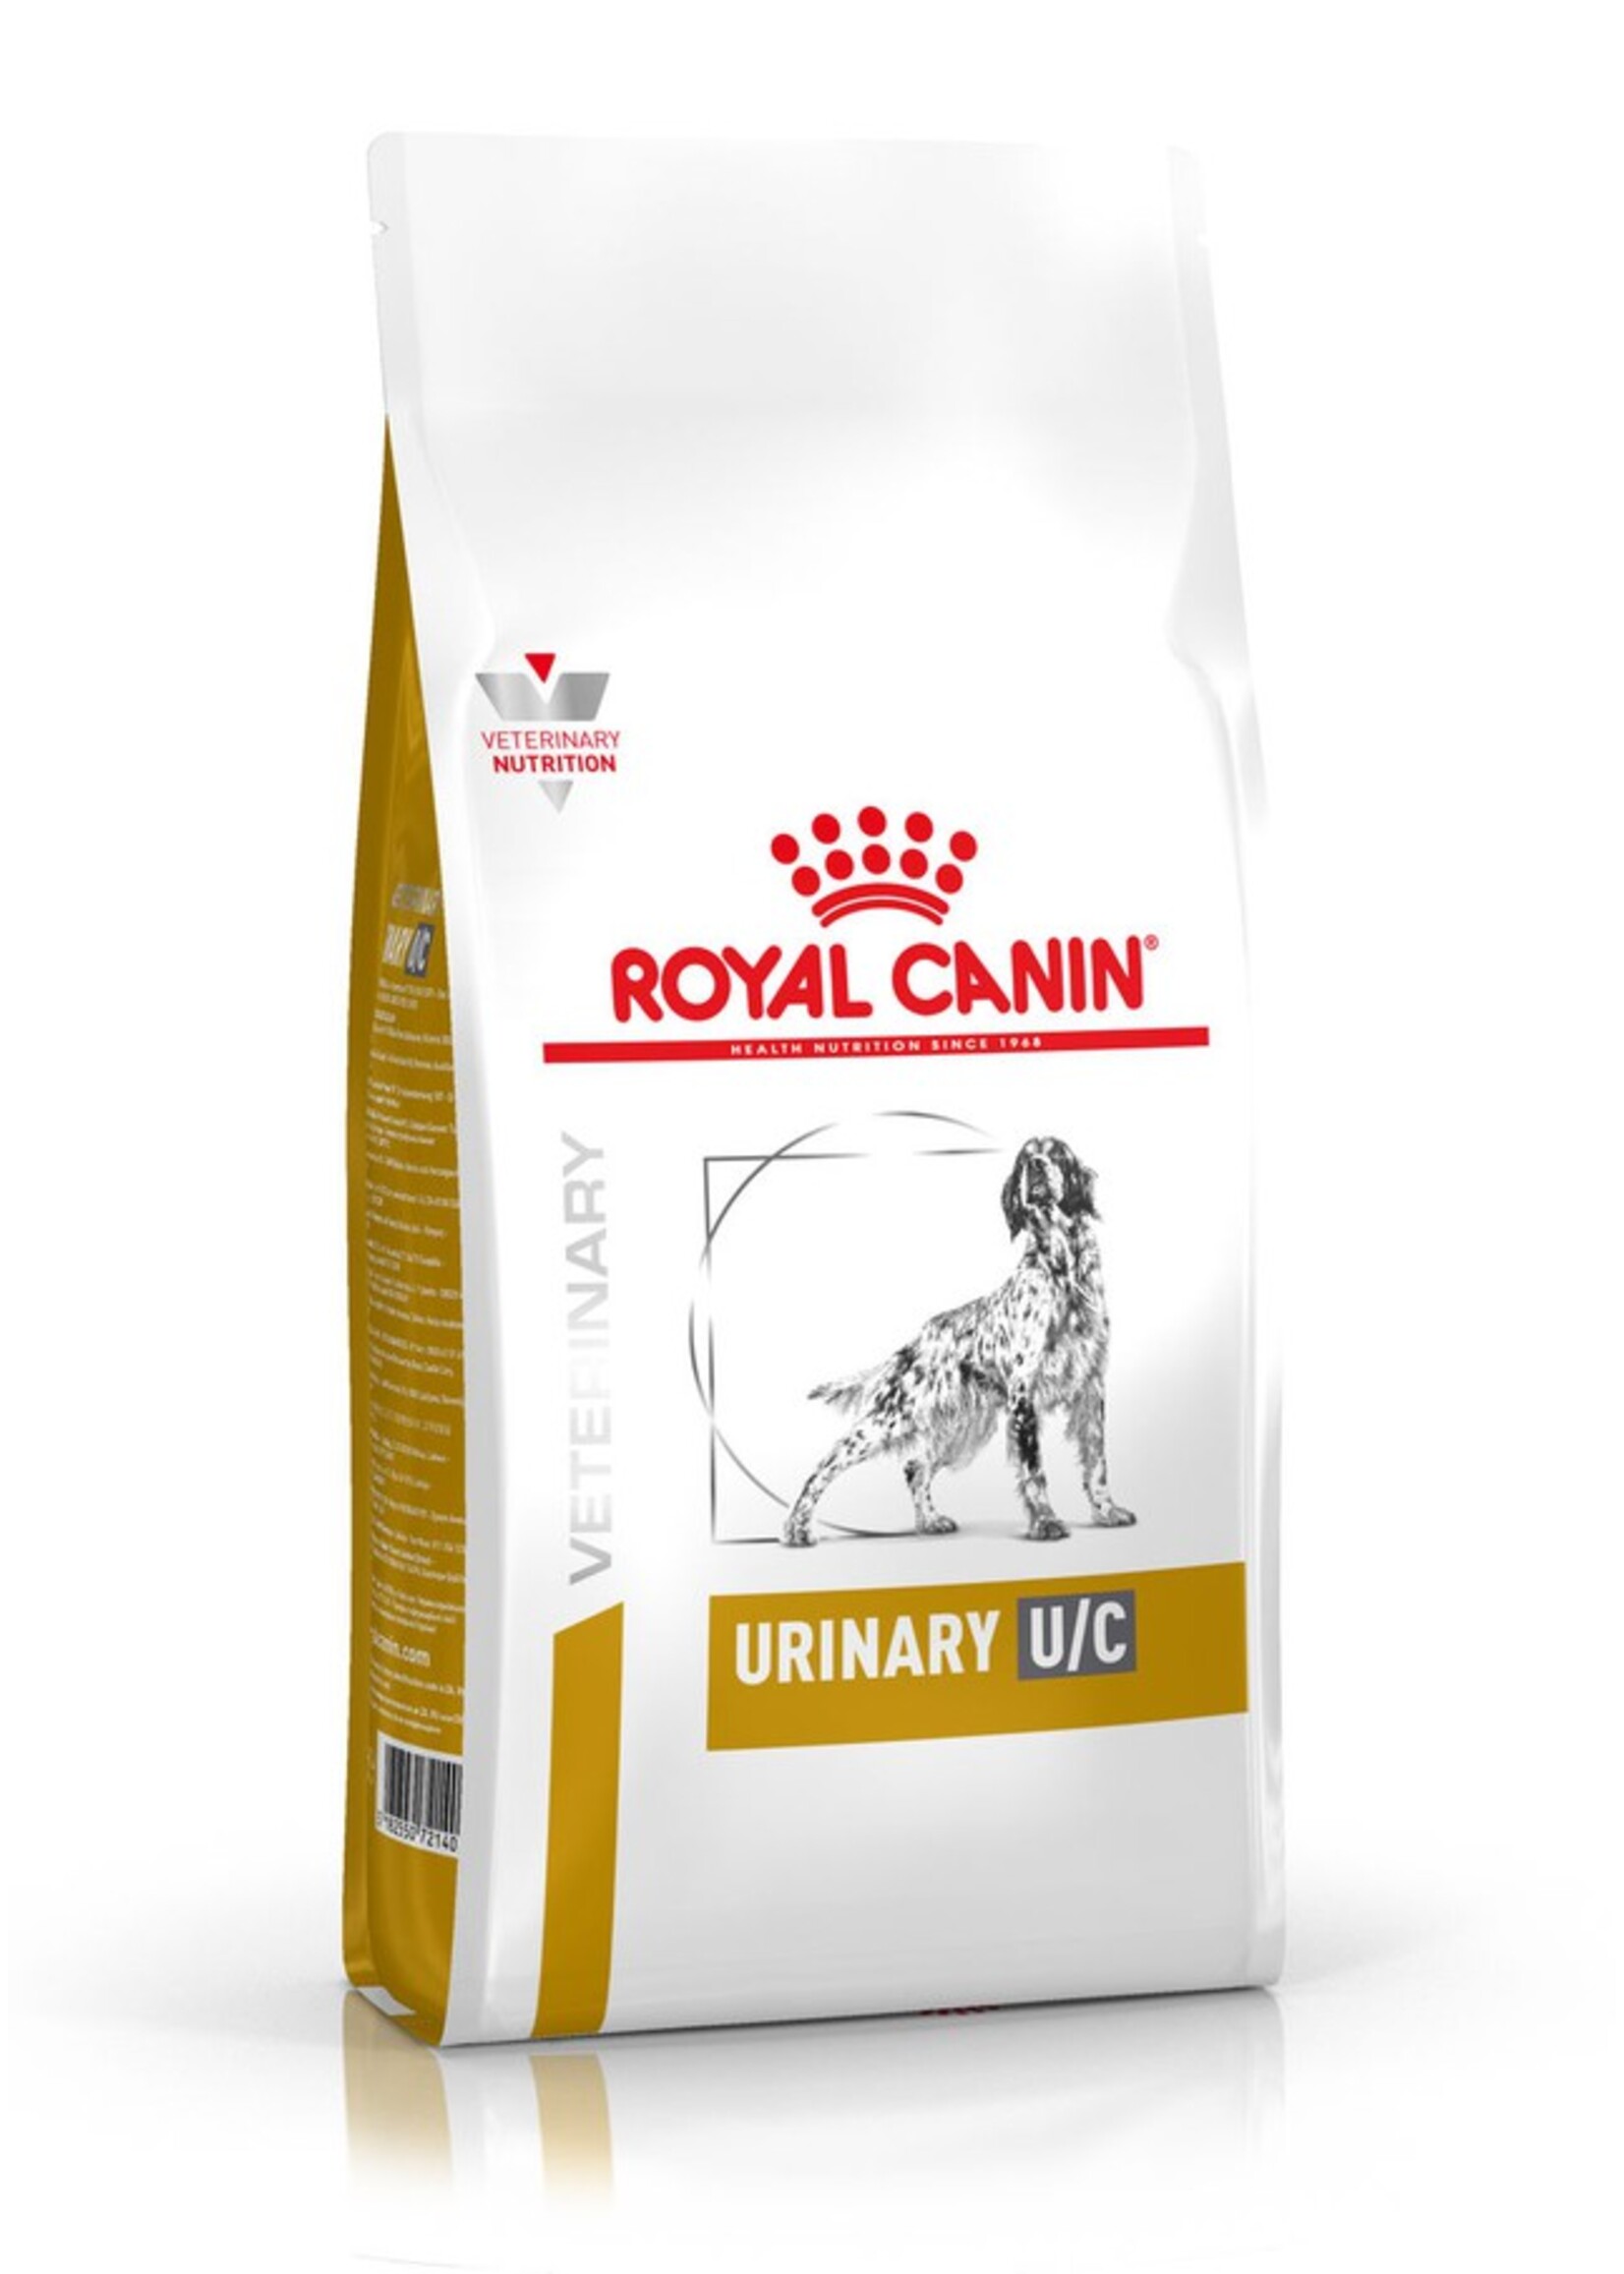 Royal Canin Royal Canin Urinary U/c Low Purine   Dog 14kg